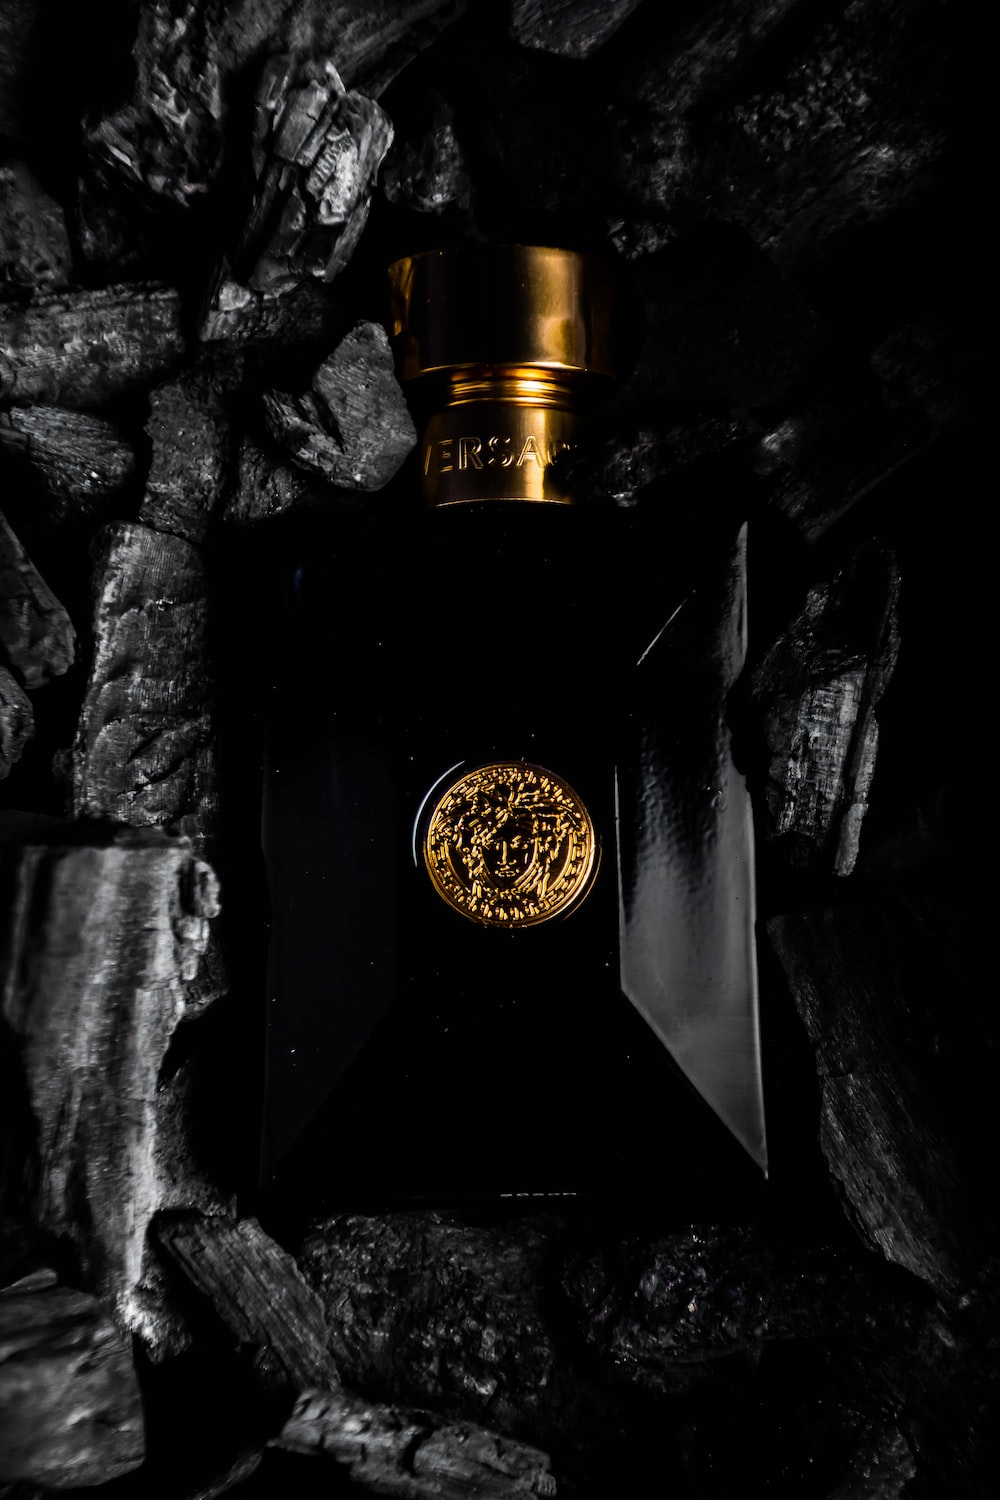 a black bottle with a gold emblem on it